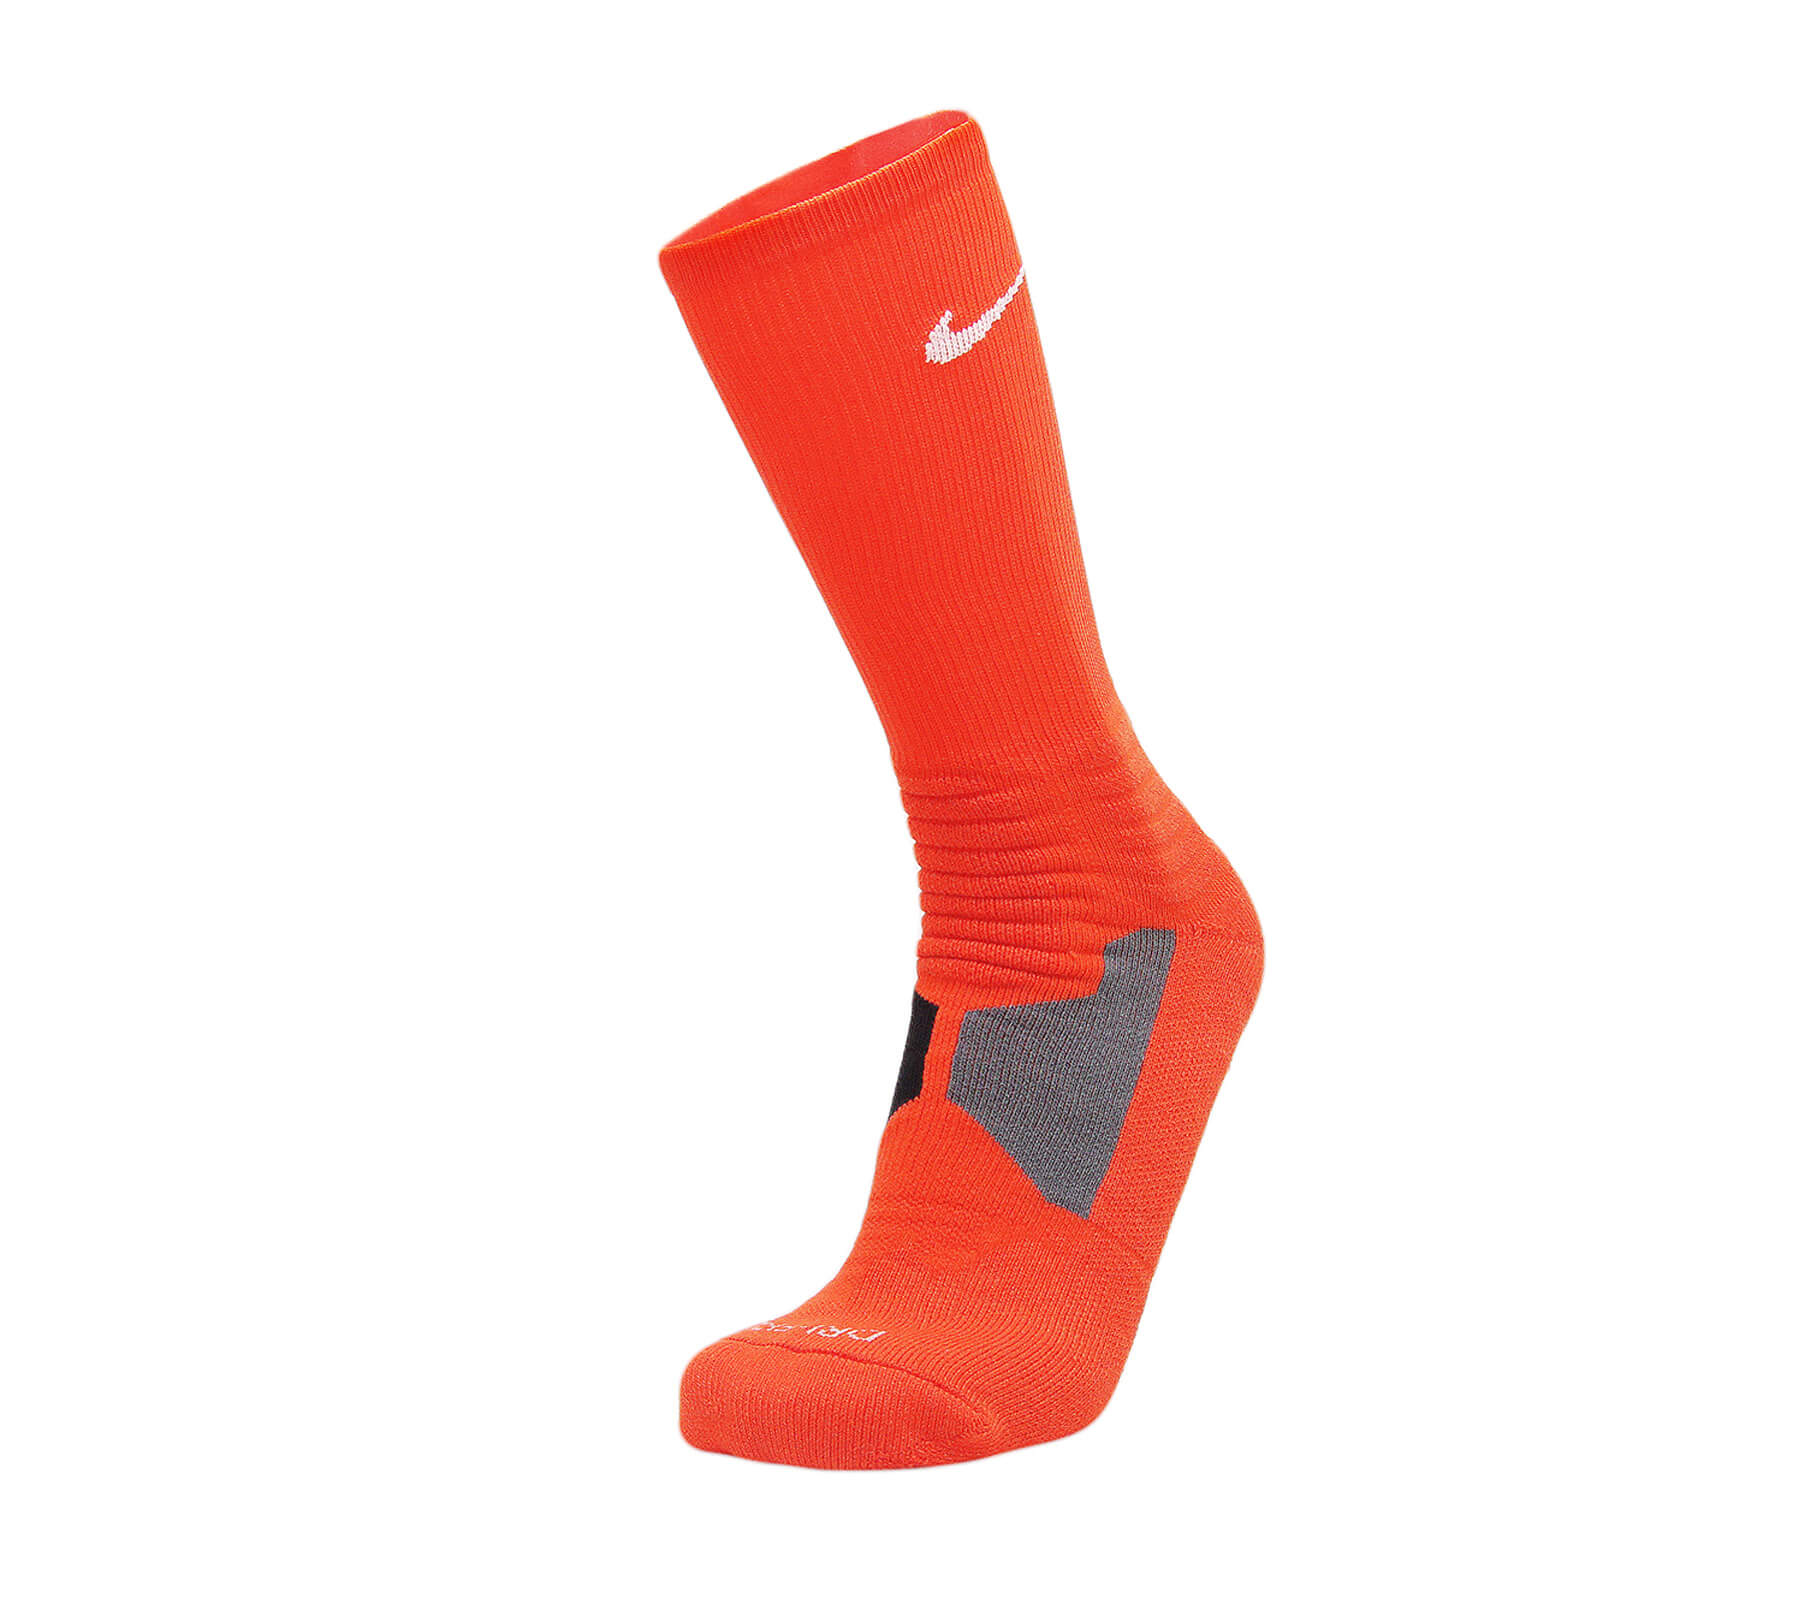 Valiente intimidad Lesionarse Nike Hyper Elite Basketball Socks Bright Orange White – Pimp Kicks